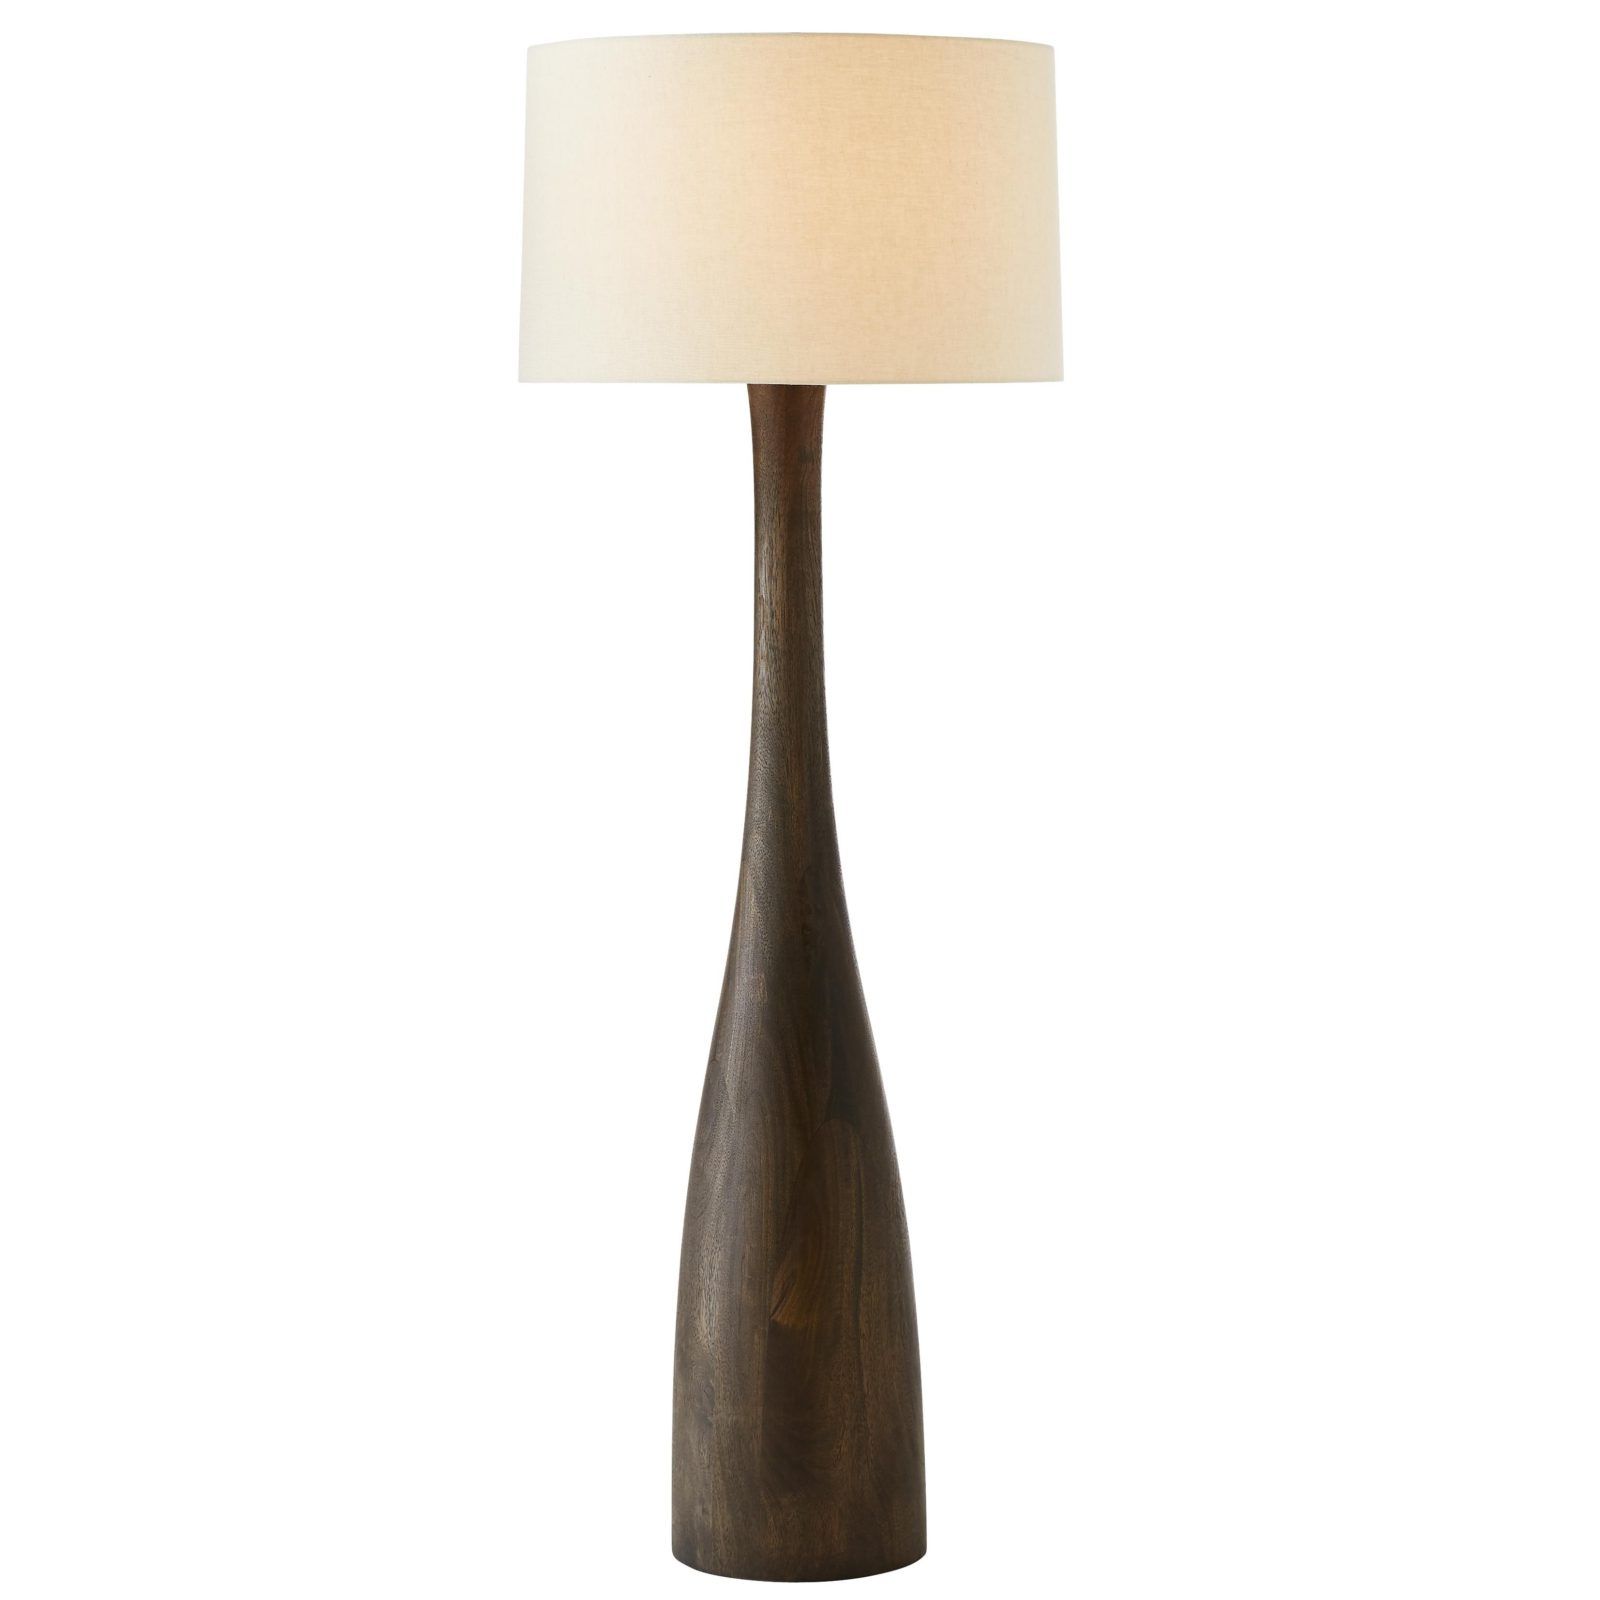 Trendy Mango Wood Floor Lamps Throughout Mango Wood Floor Lamp – Solid Mango Wood Accent Floor Lamp (View 2 of 15)